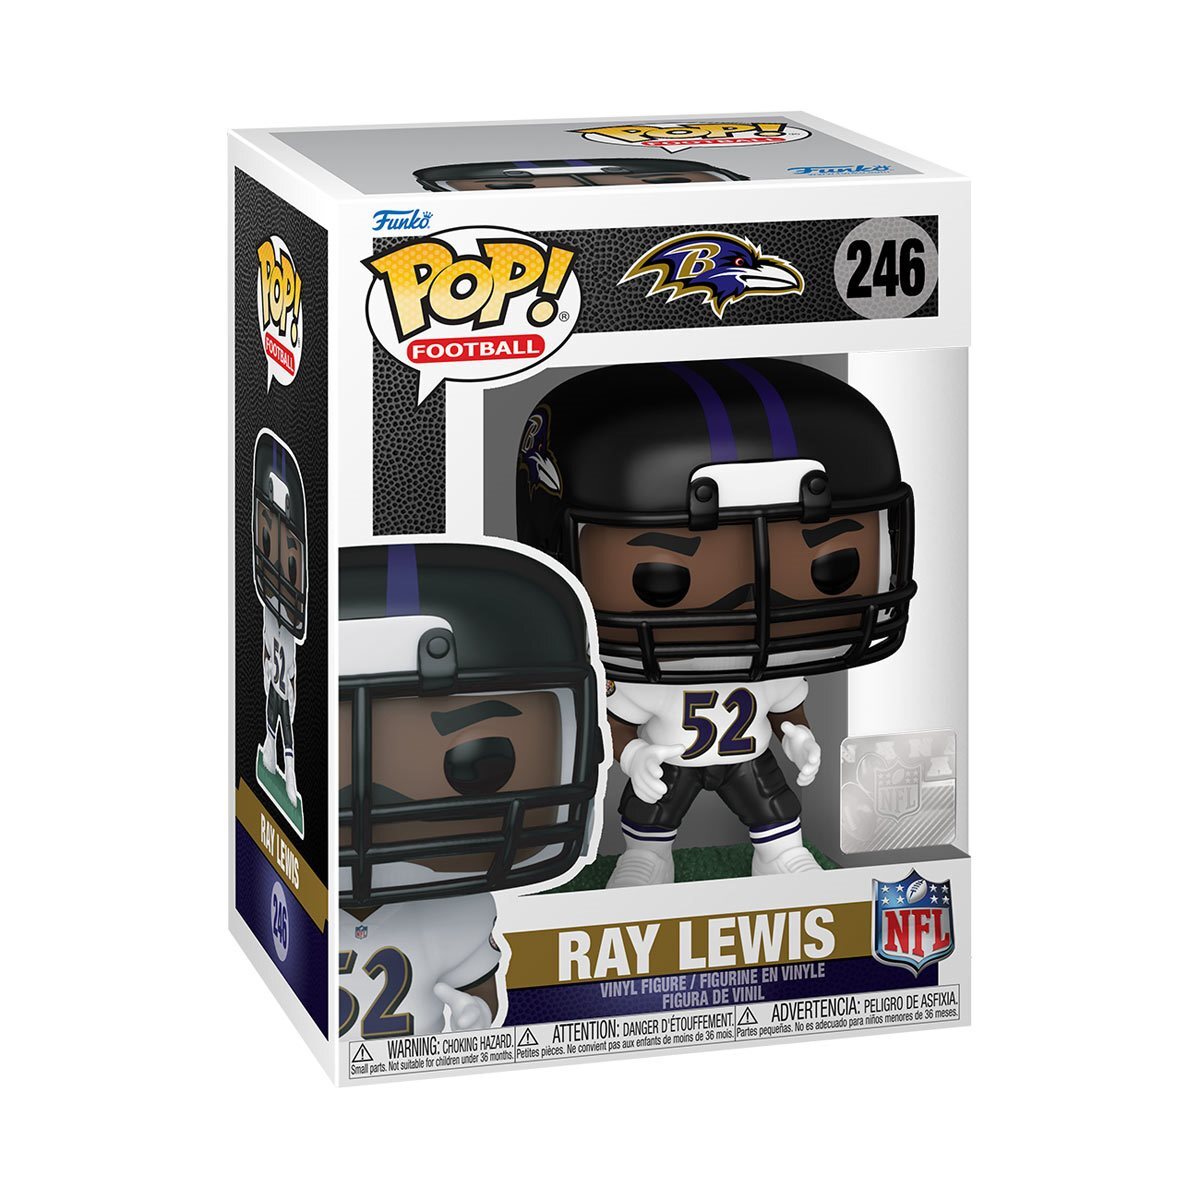 NFL Ravens - Ray Lewis #246 - Funko Pop Vinyl Figure (Sports)